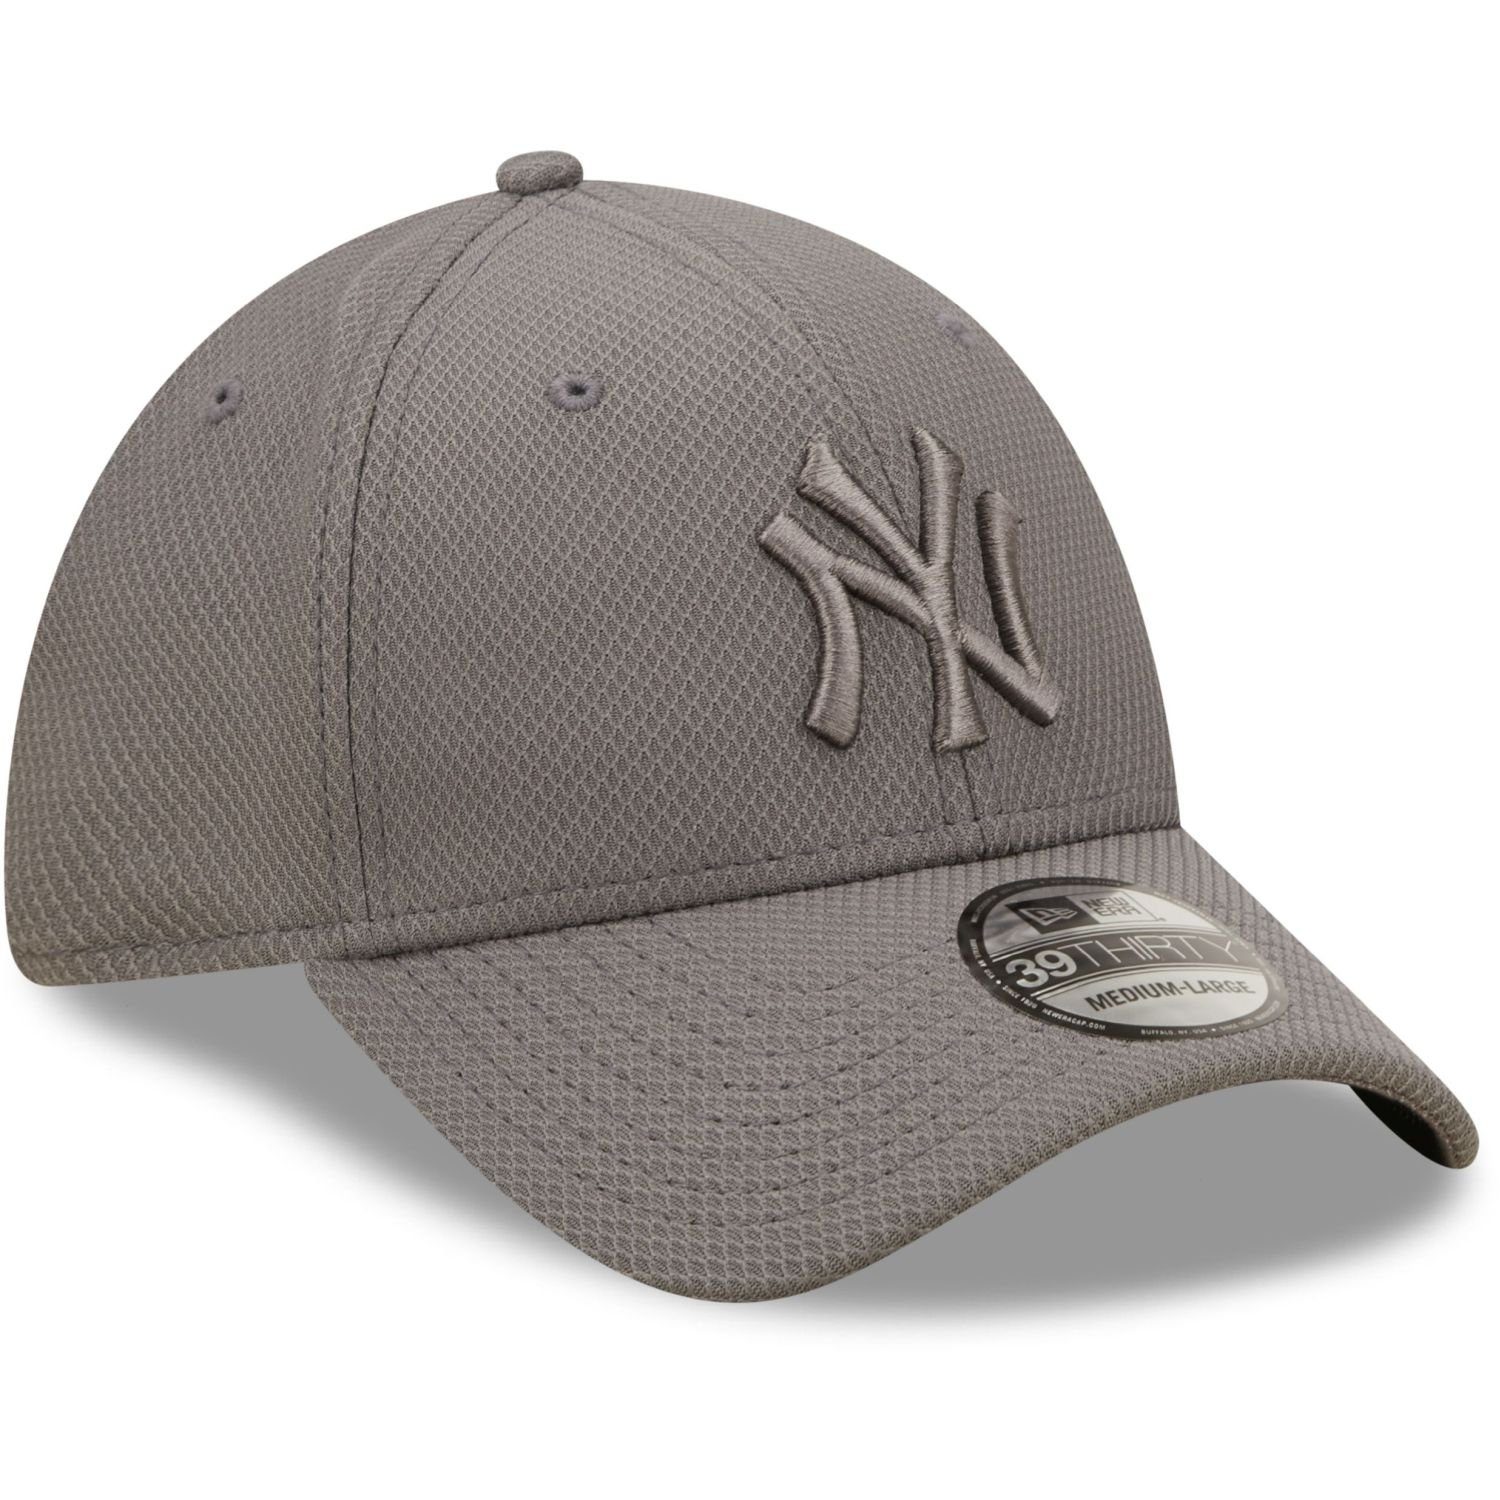 Diamond Flex Cap New York Era 39Thirty New Yankees